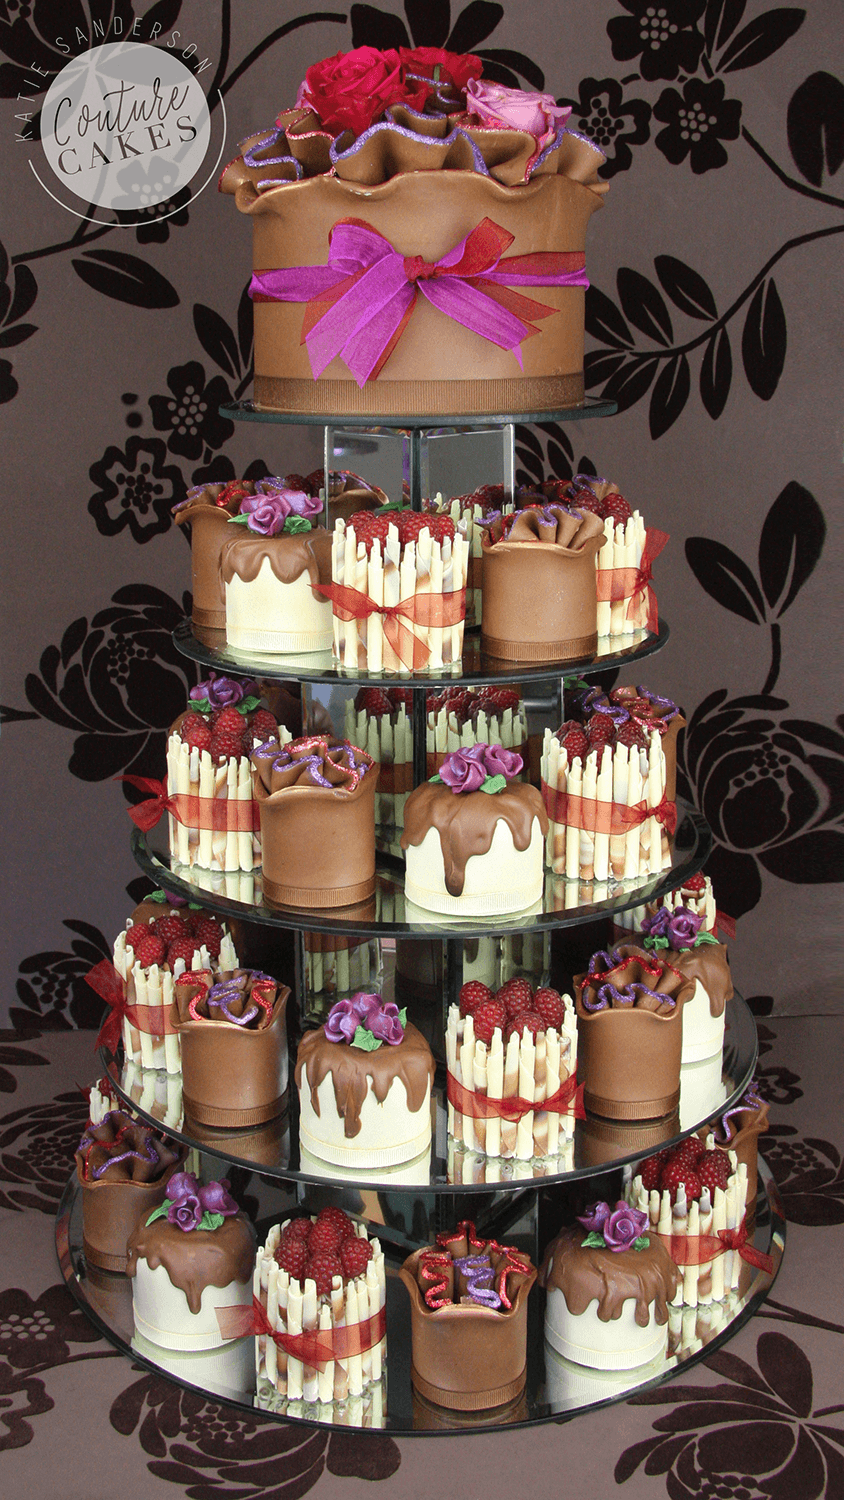 Serves 46 mini cakes & 20 portion top tier, Price as pictured £577 (46 mini cakes & 20 portion top tier)